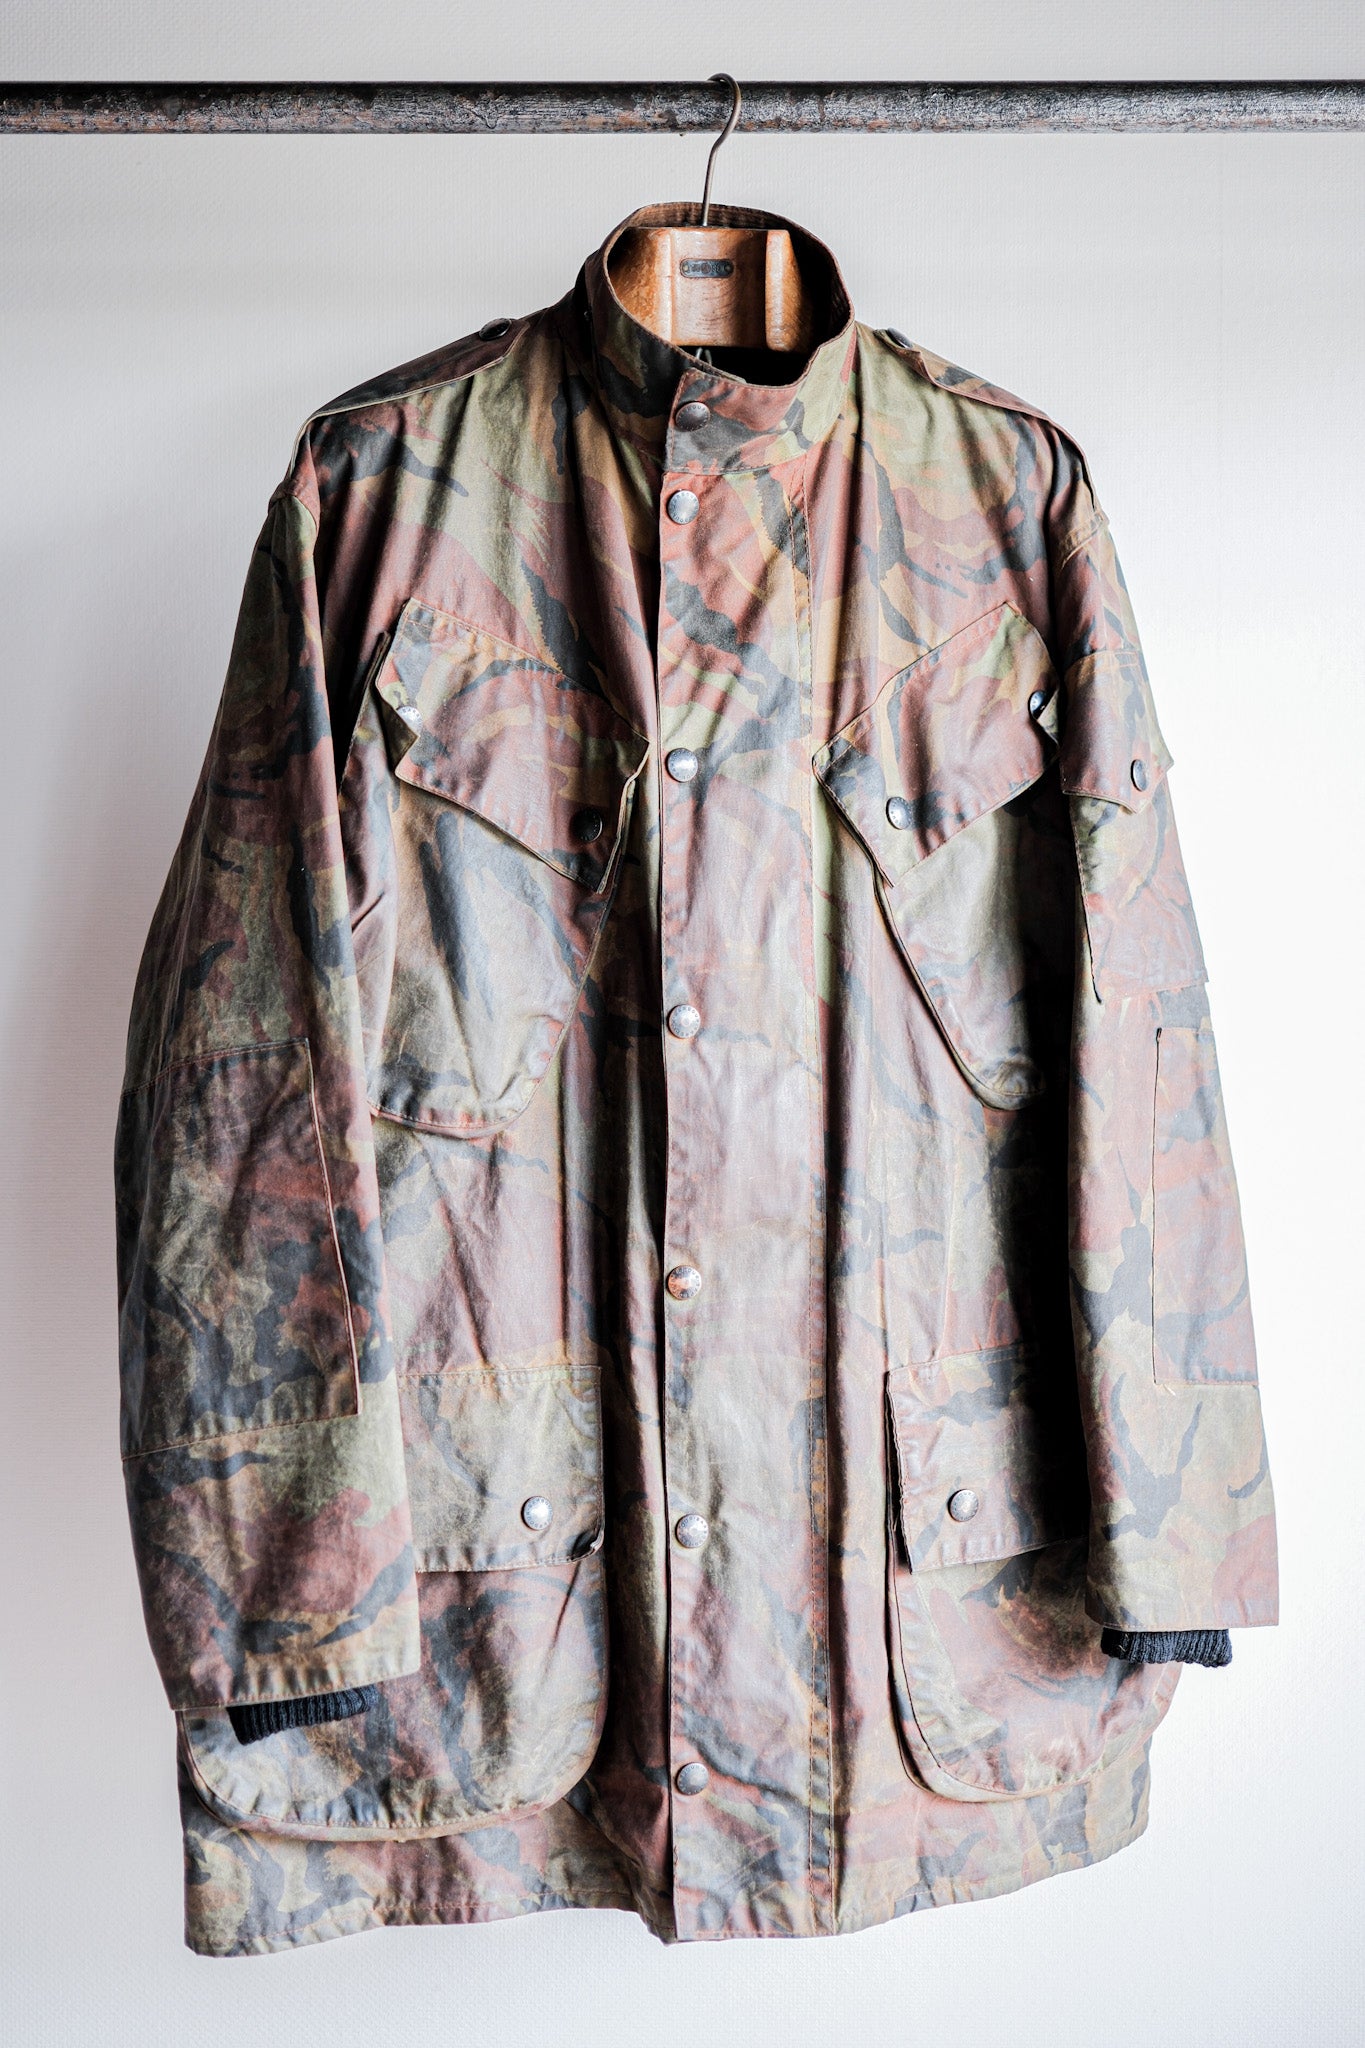 [~ 80's] Barbour Barbour DPM แจ็คเก็ตแว็กซ์แว็กซ์“ The Military”“ รุ่นที่ 2” 2 Crest Size.42